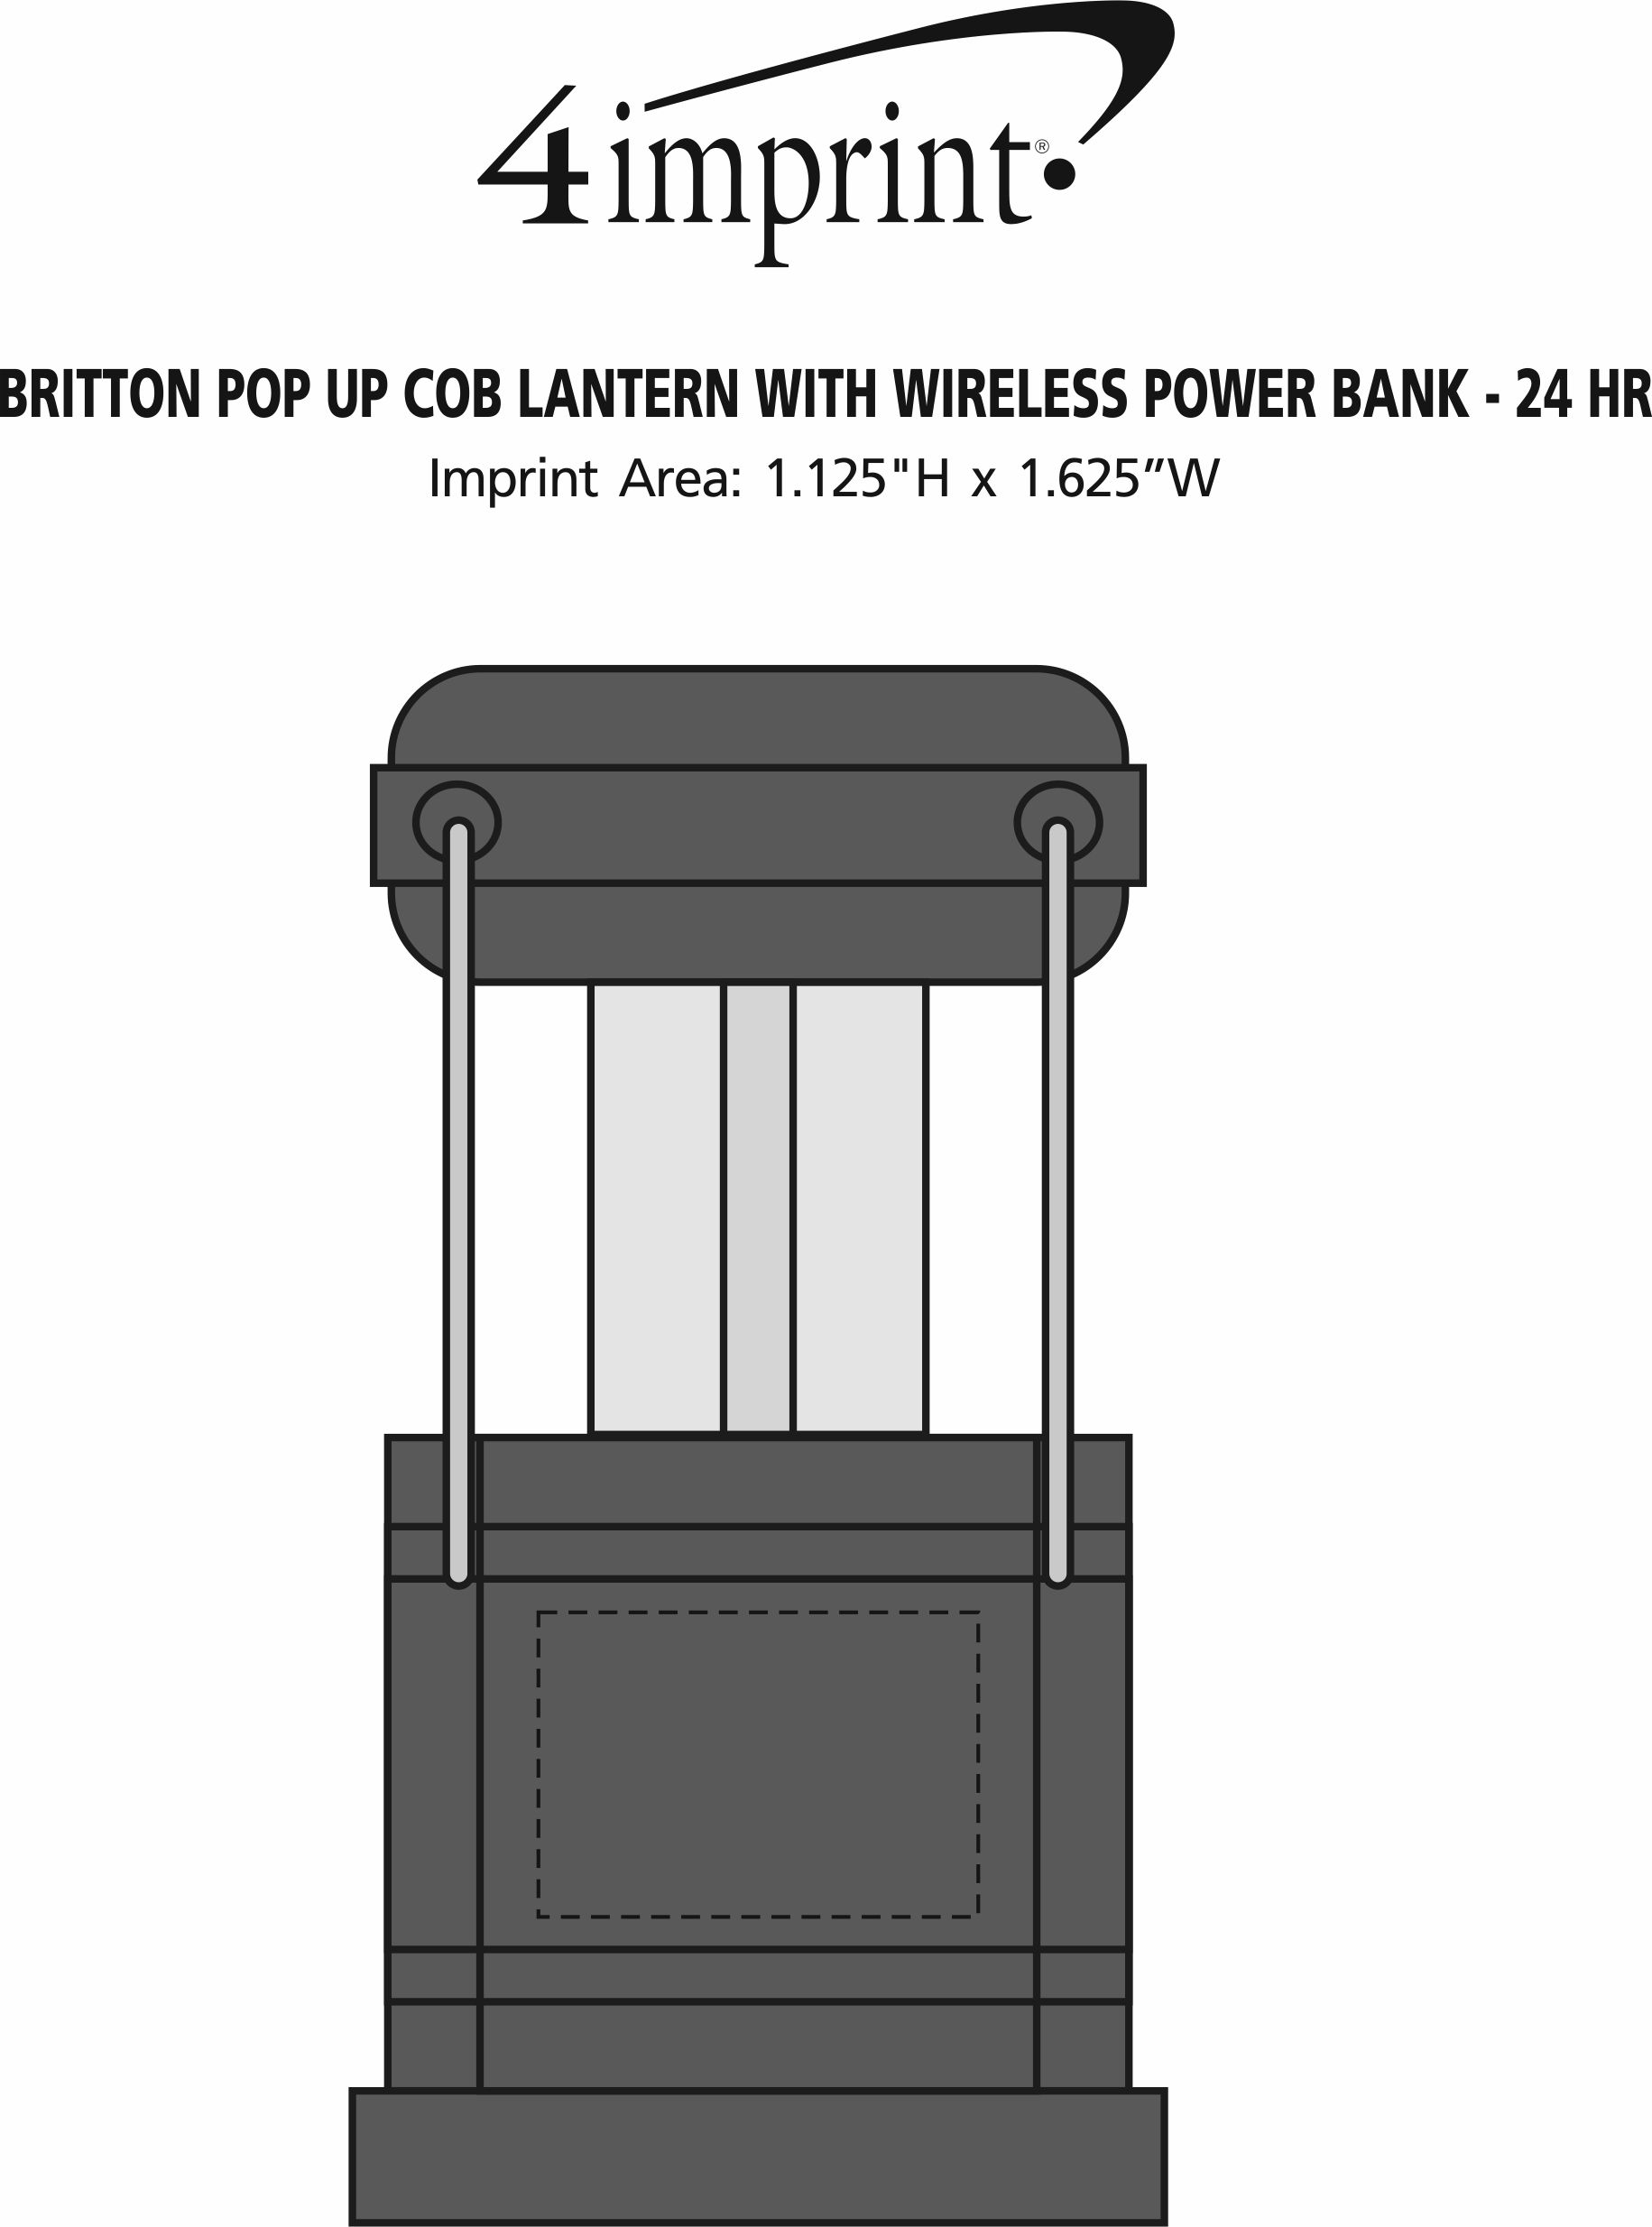 Imprint Area of Britton Pop Up COB Lantern with Wireless Power Bank - 24 hr